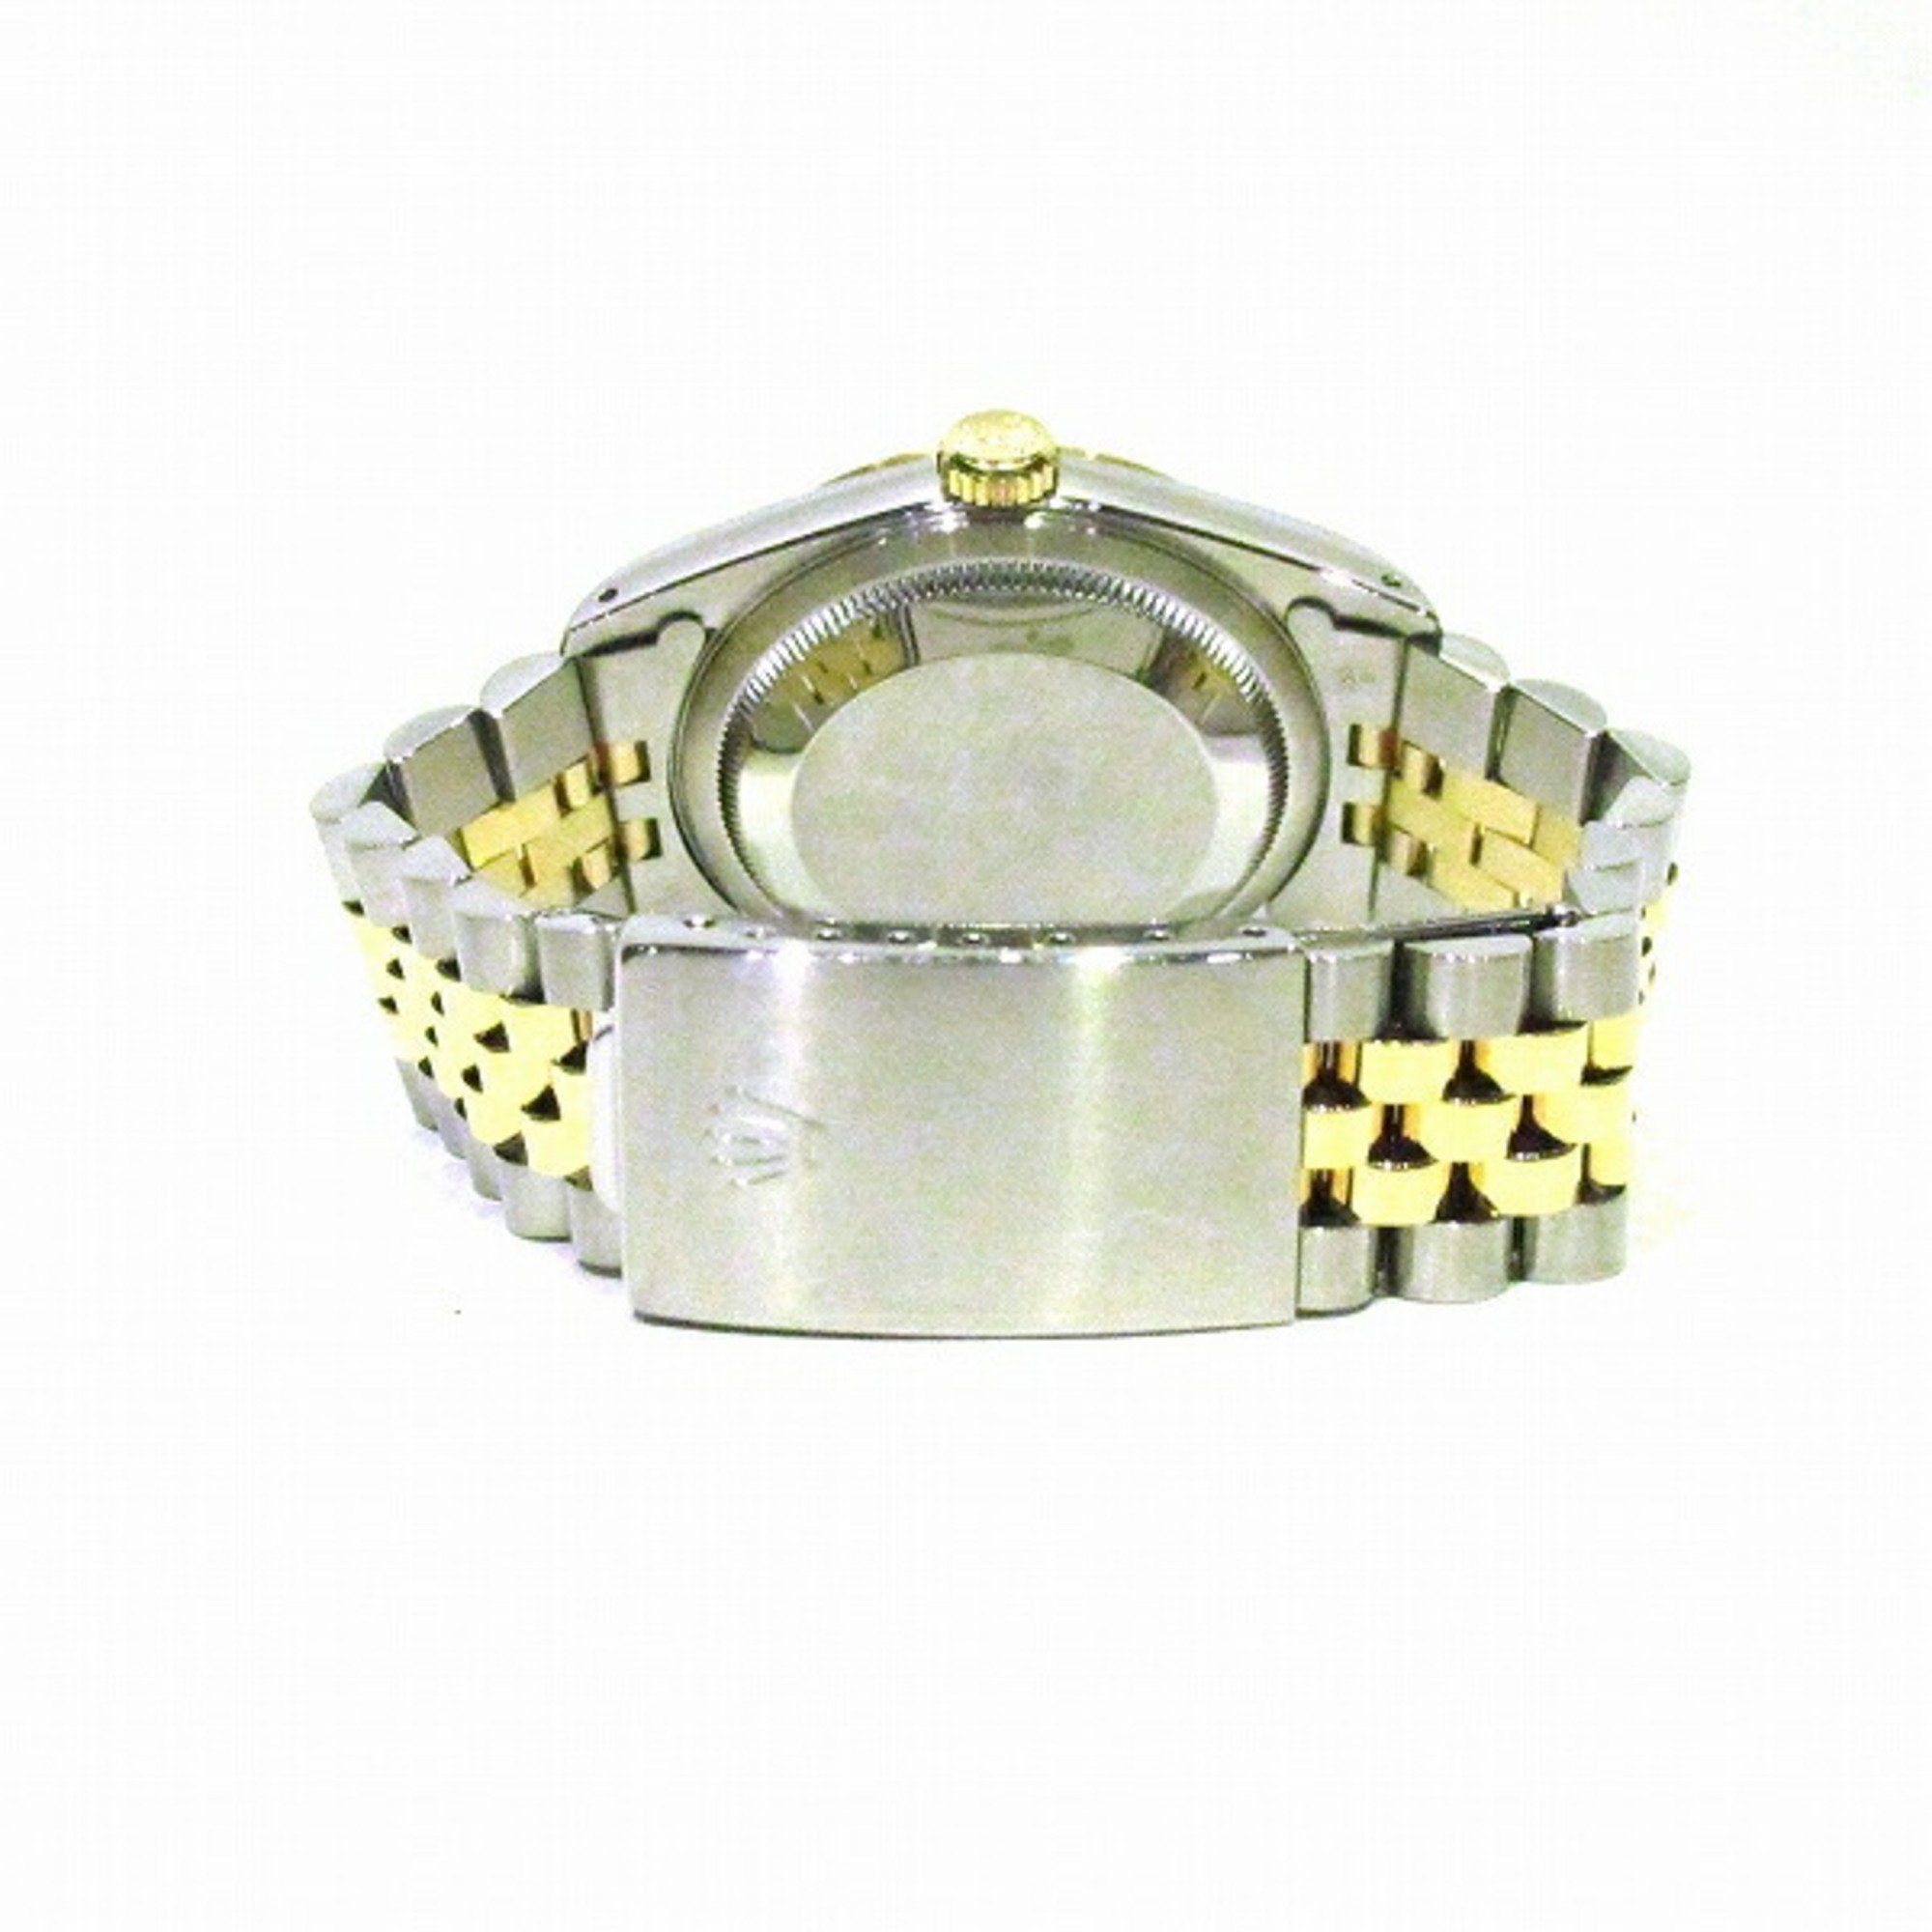 Rolex Datejust 16233 Automatic Watch X Series Men's